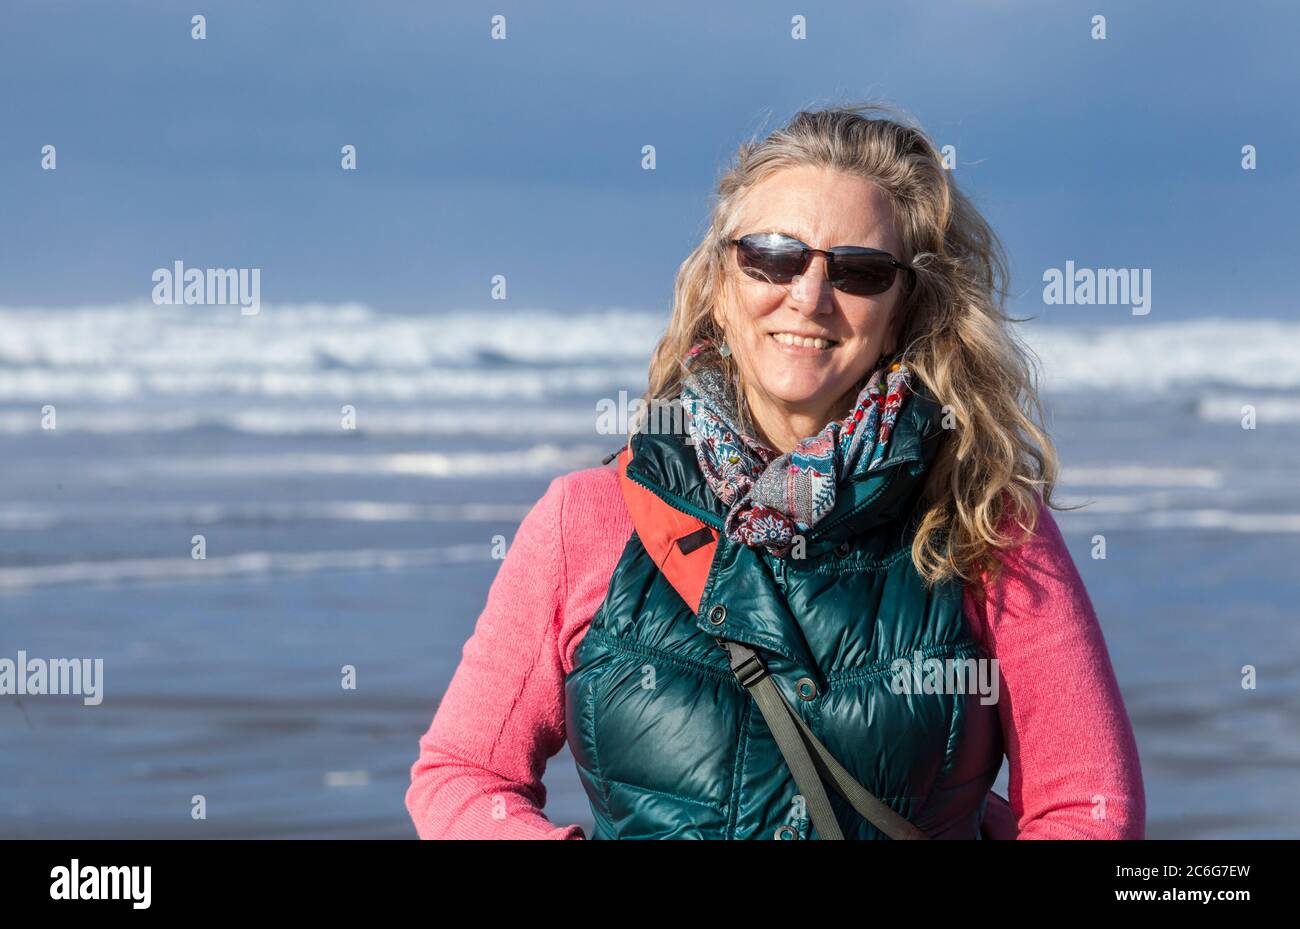 A woman standing on a beach. Pacific coast, Seaside, Oregon, USA. Stock Photo